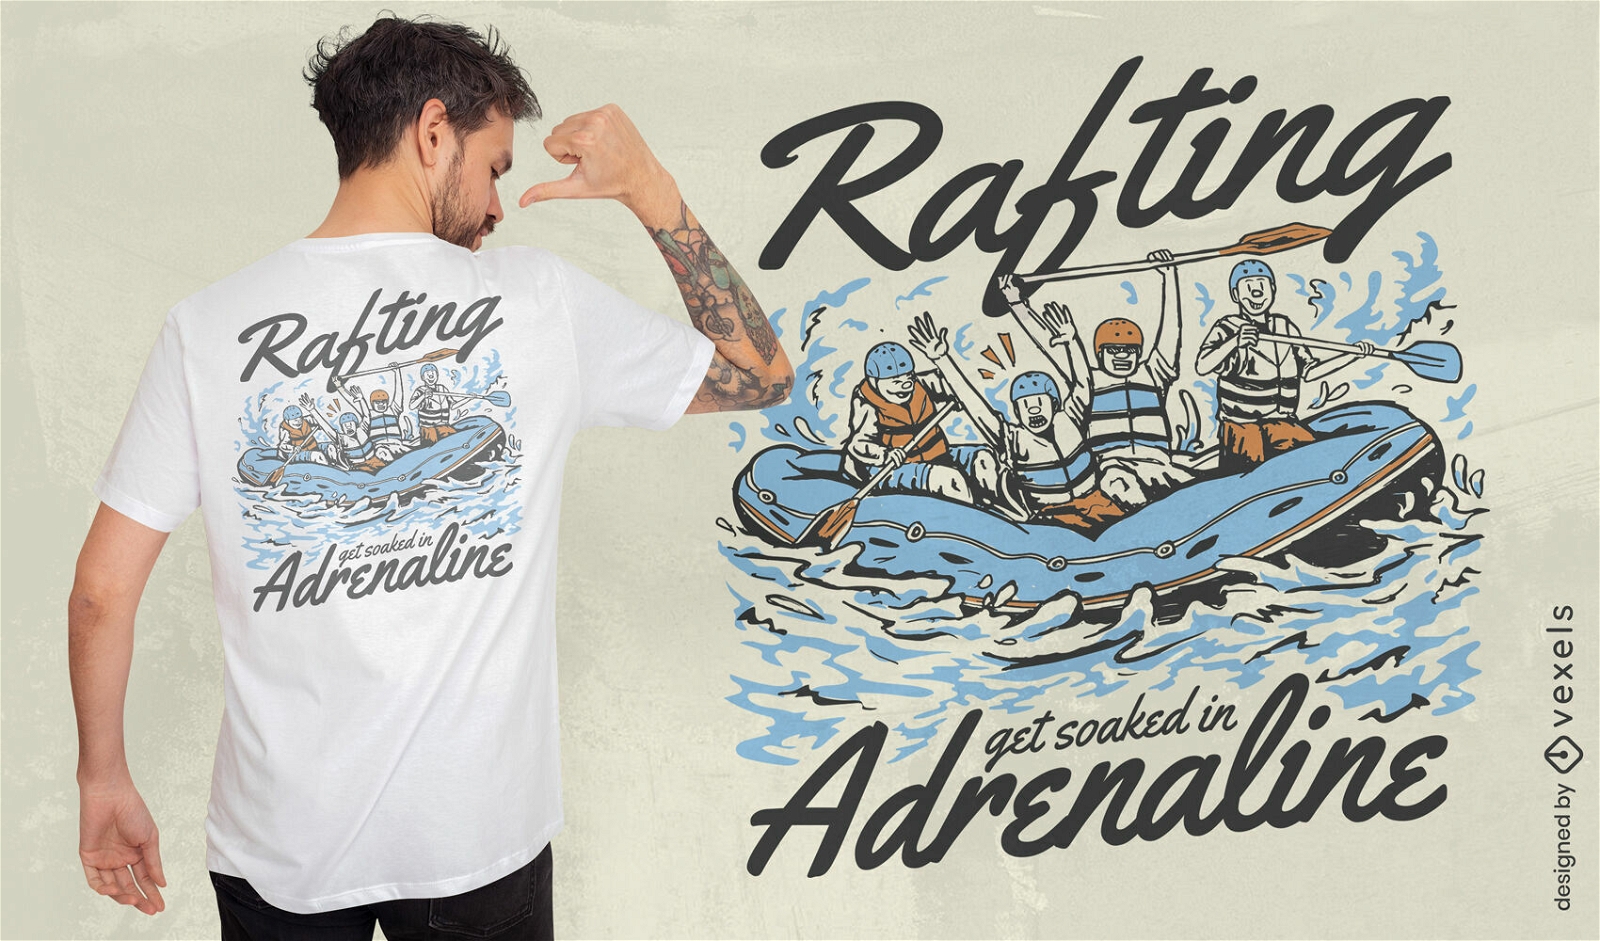 Rafting-Adrenalin-T-Shirt-Design